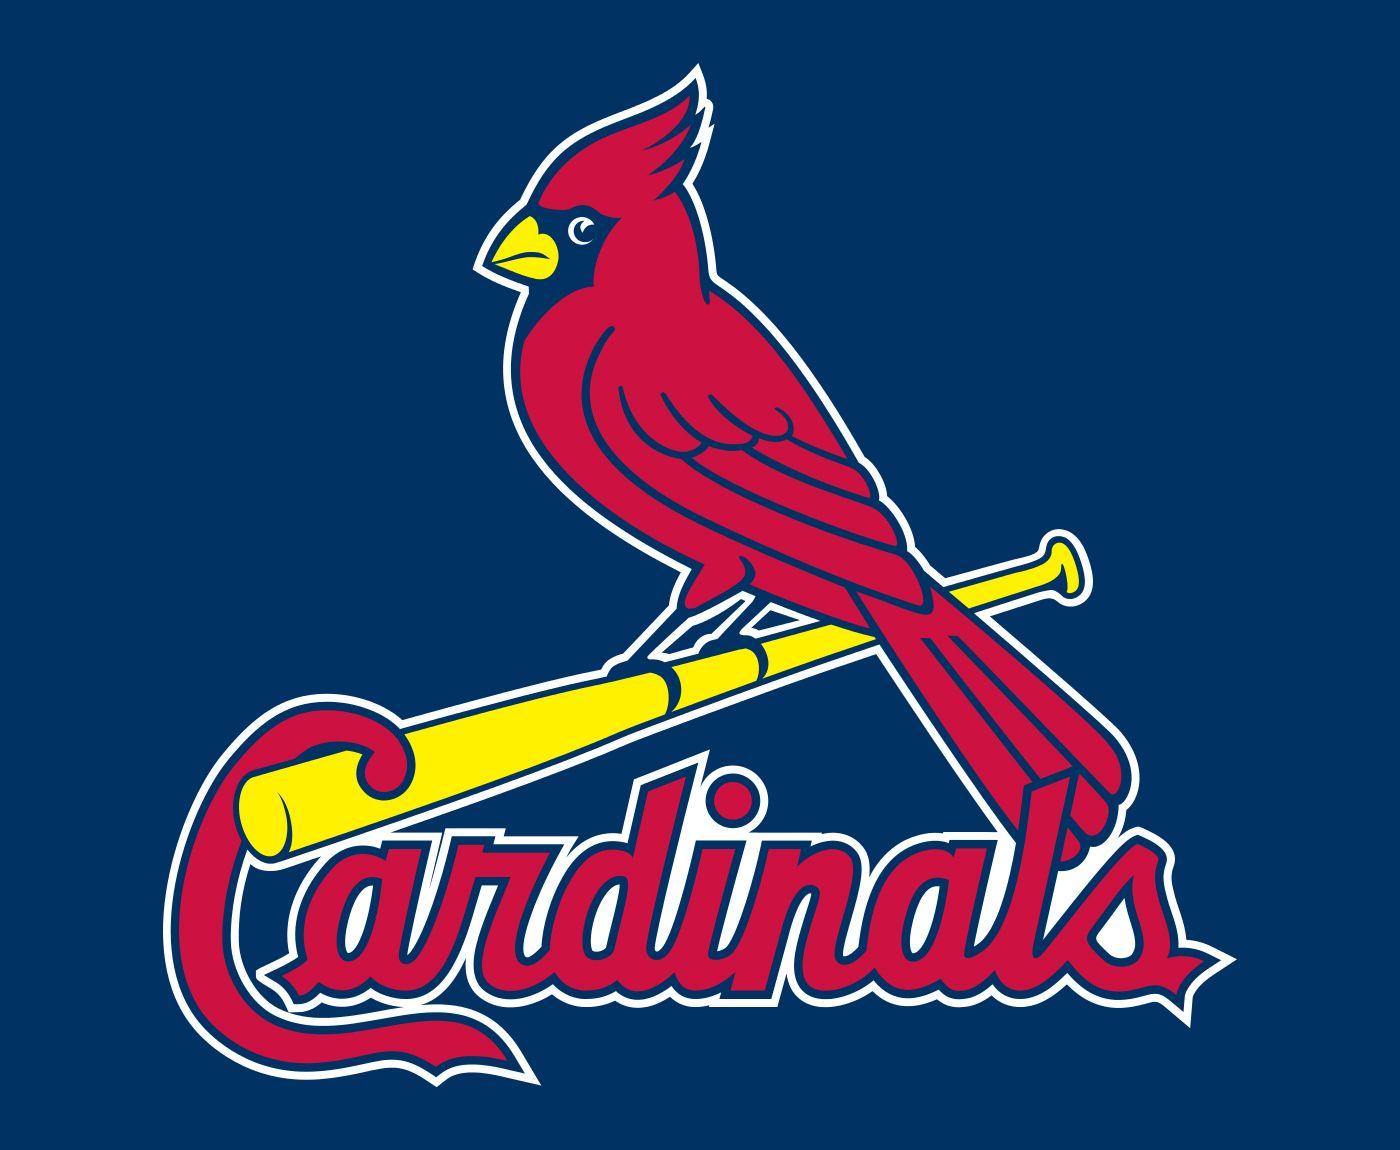 St. Louis Cardinals Logo - St. Louis Cardinals Logo color | All logos world | Pinterest ...